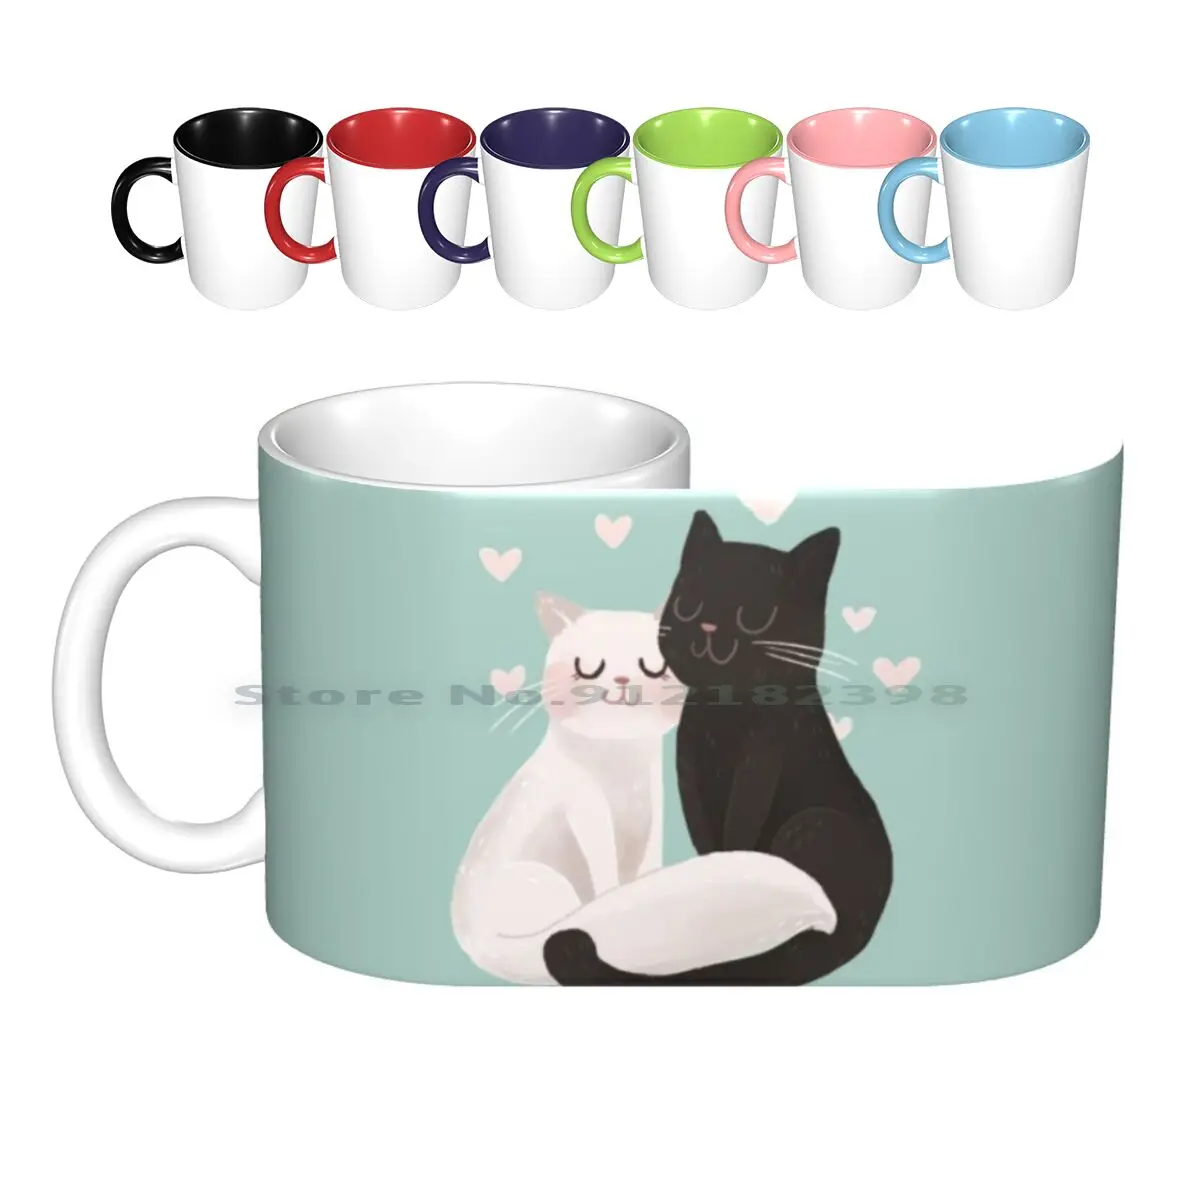 

Catlove Ceramic Mugs Coffee Cups Milk Tea Mug Cat Cats Kitty Kitten Animals Cute Animals Kittens Felines Cute Animal Black Cat